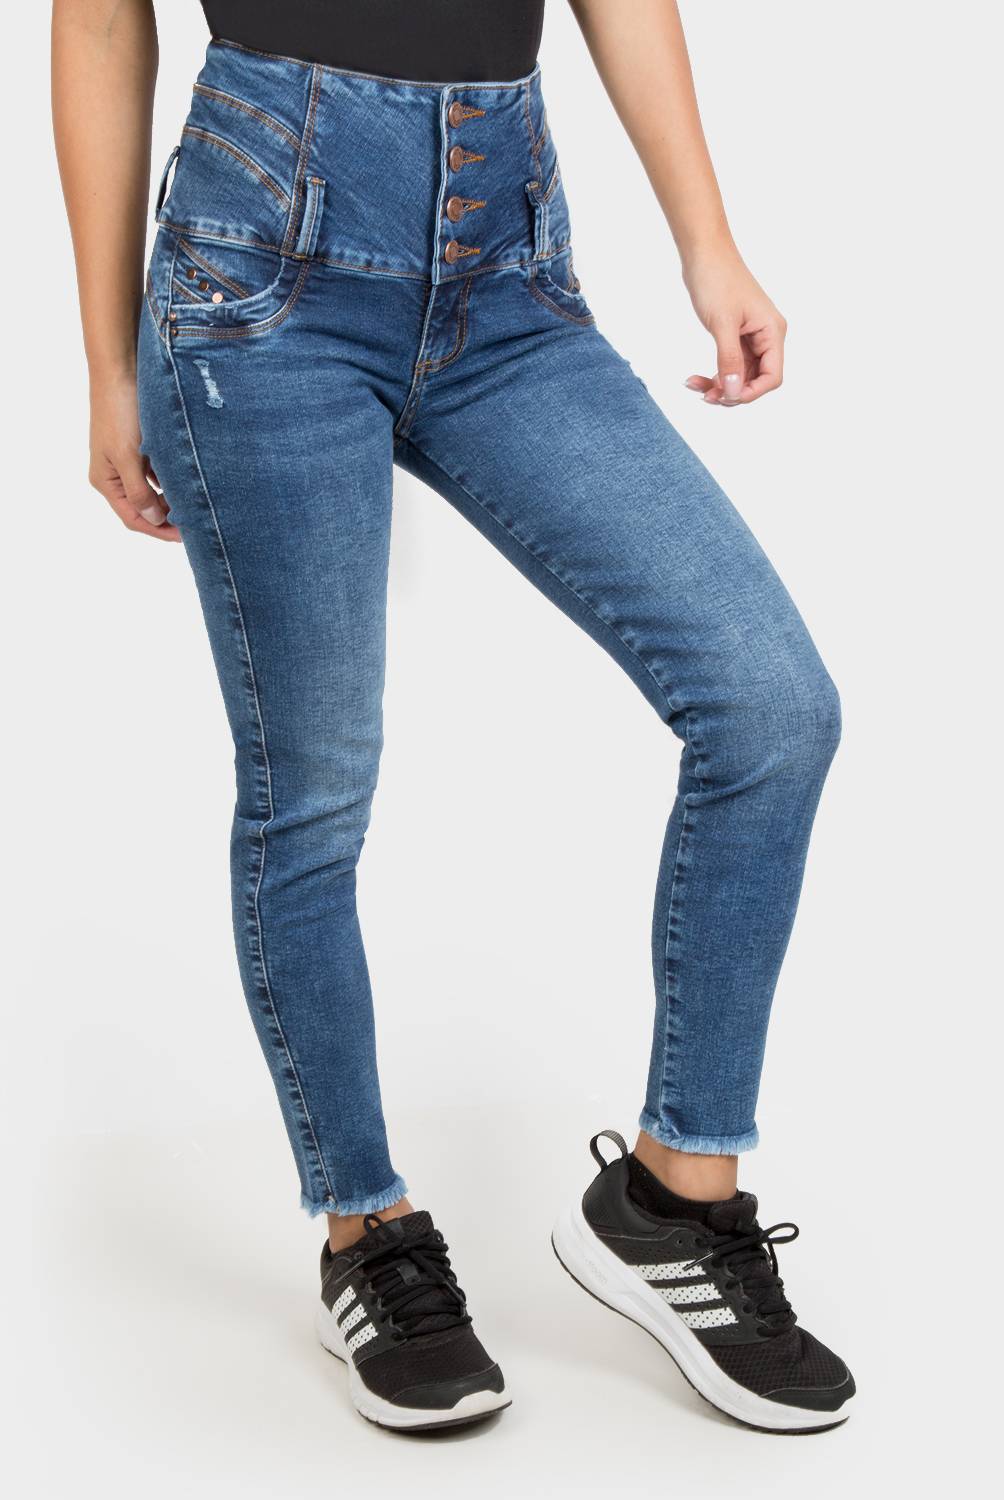 MOSSIMO - Jeans Faja